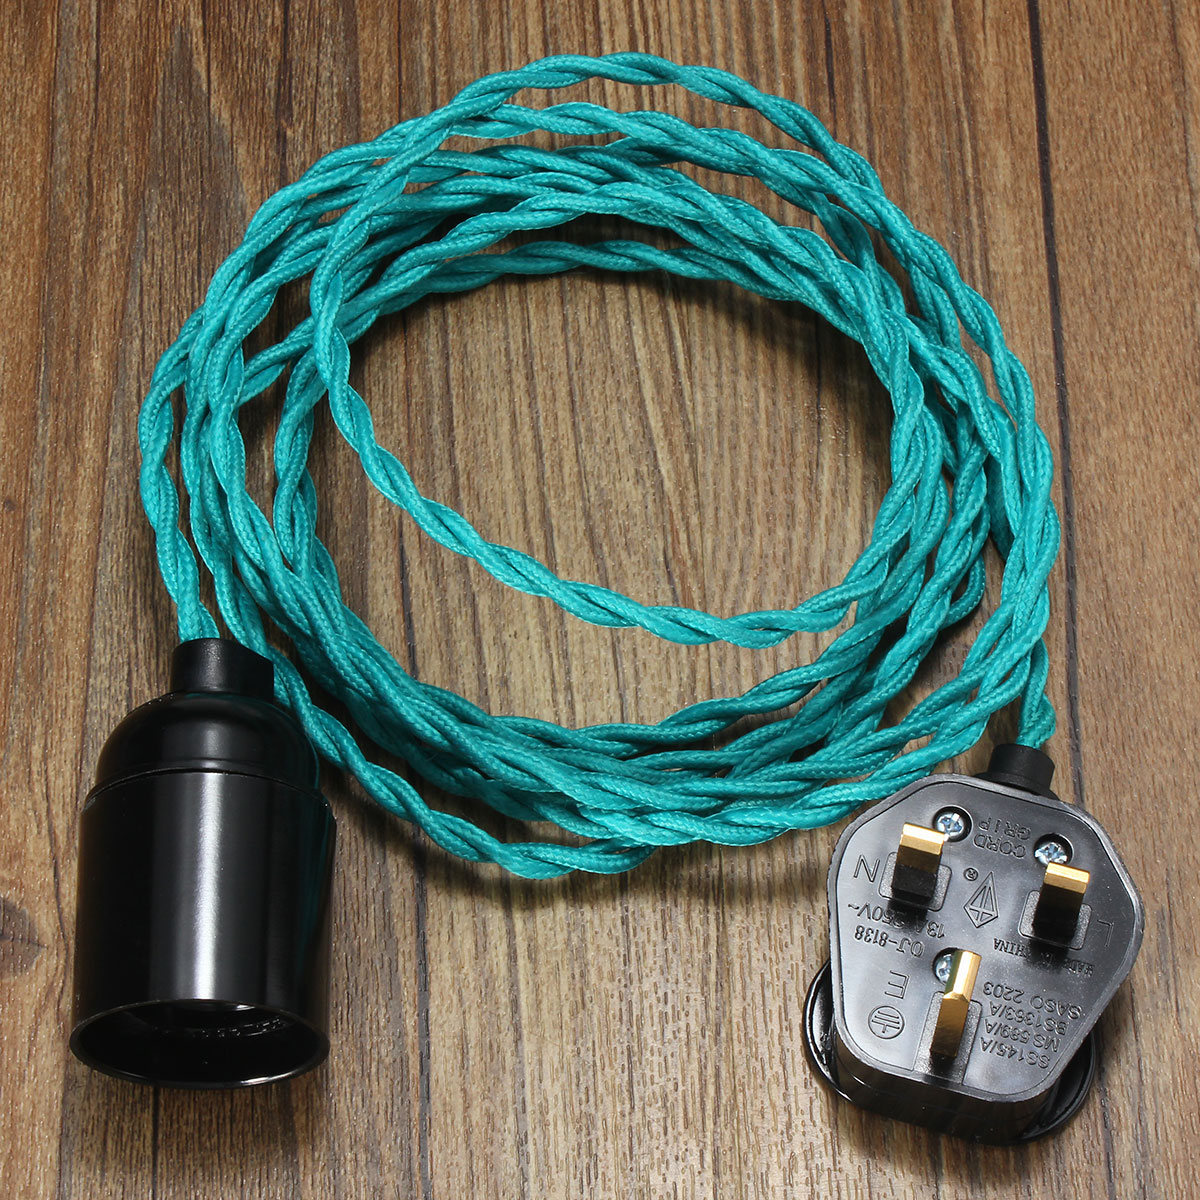 3M-E27-Vintage-Twisted-Fabric-Cable-UK-Plug-In-Pendant-Lamp-Light-Bulb-Holder-Socket-1068749-2